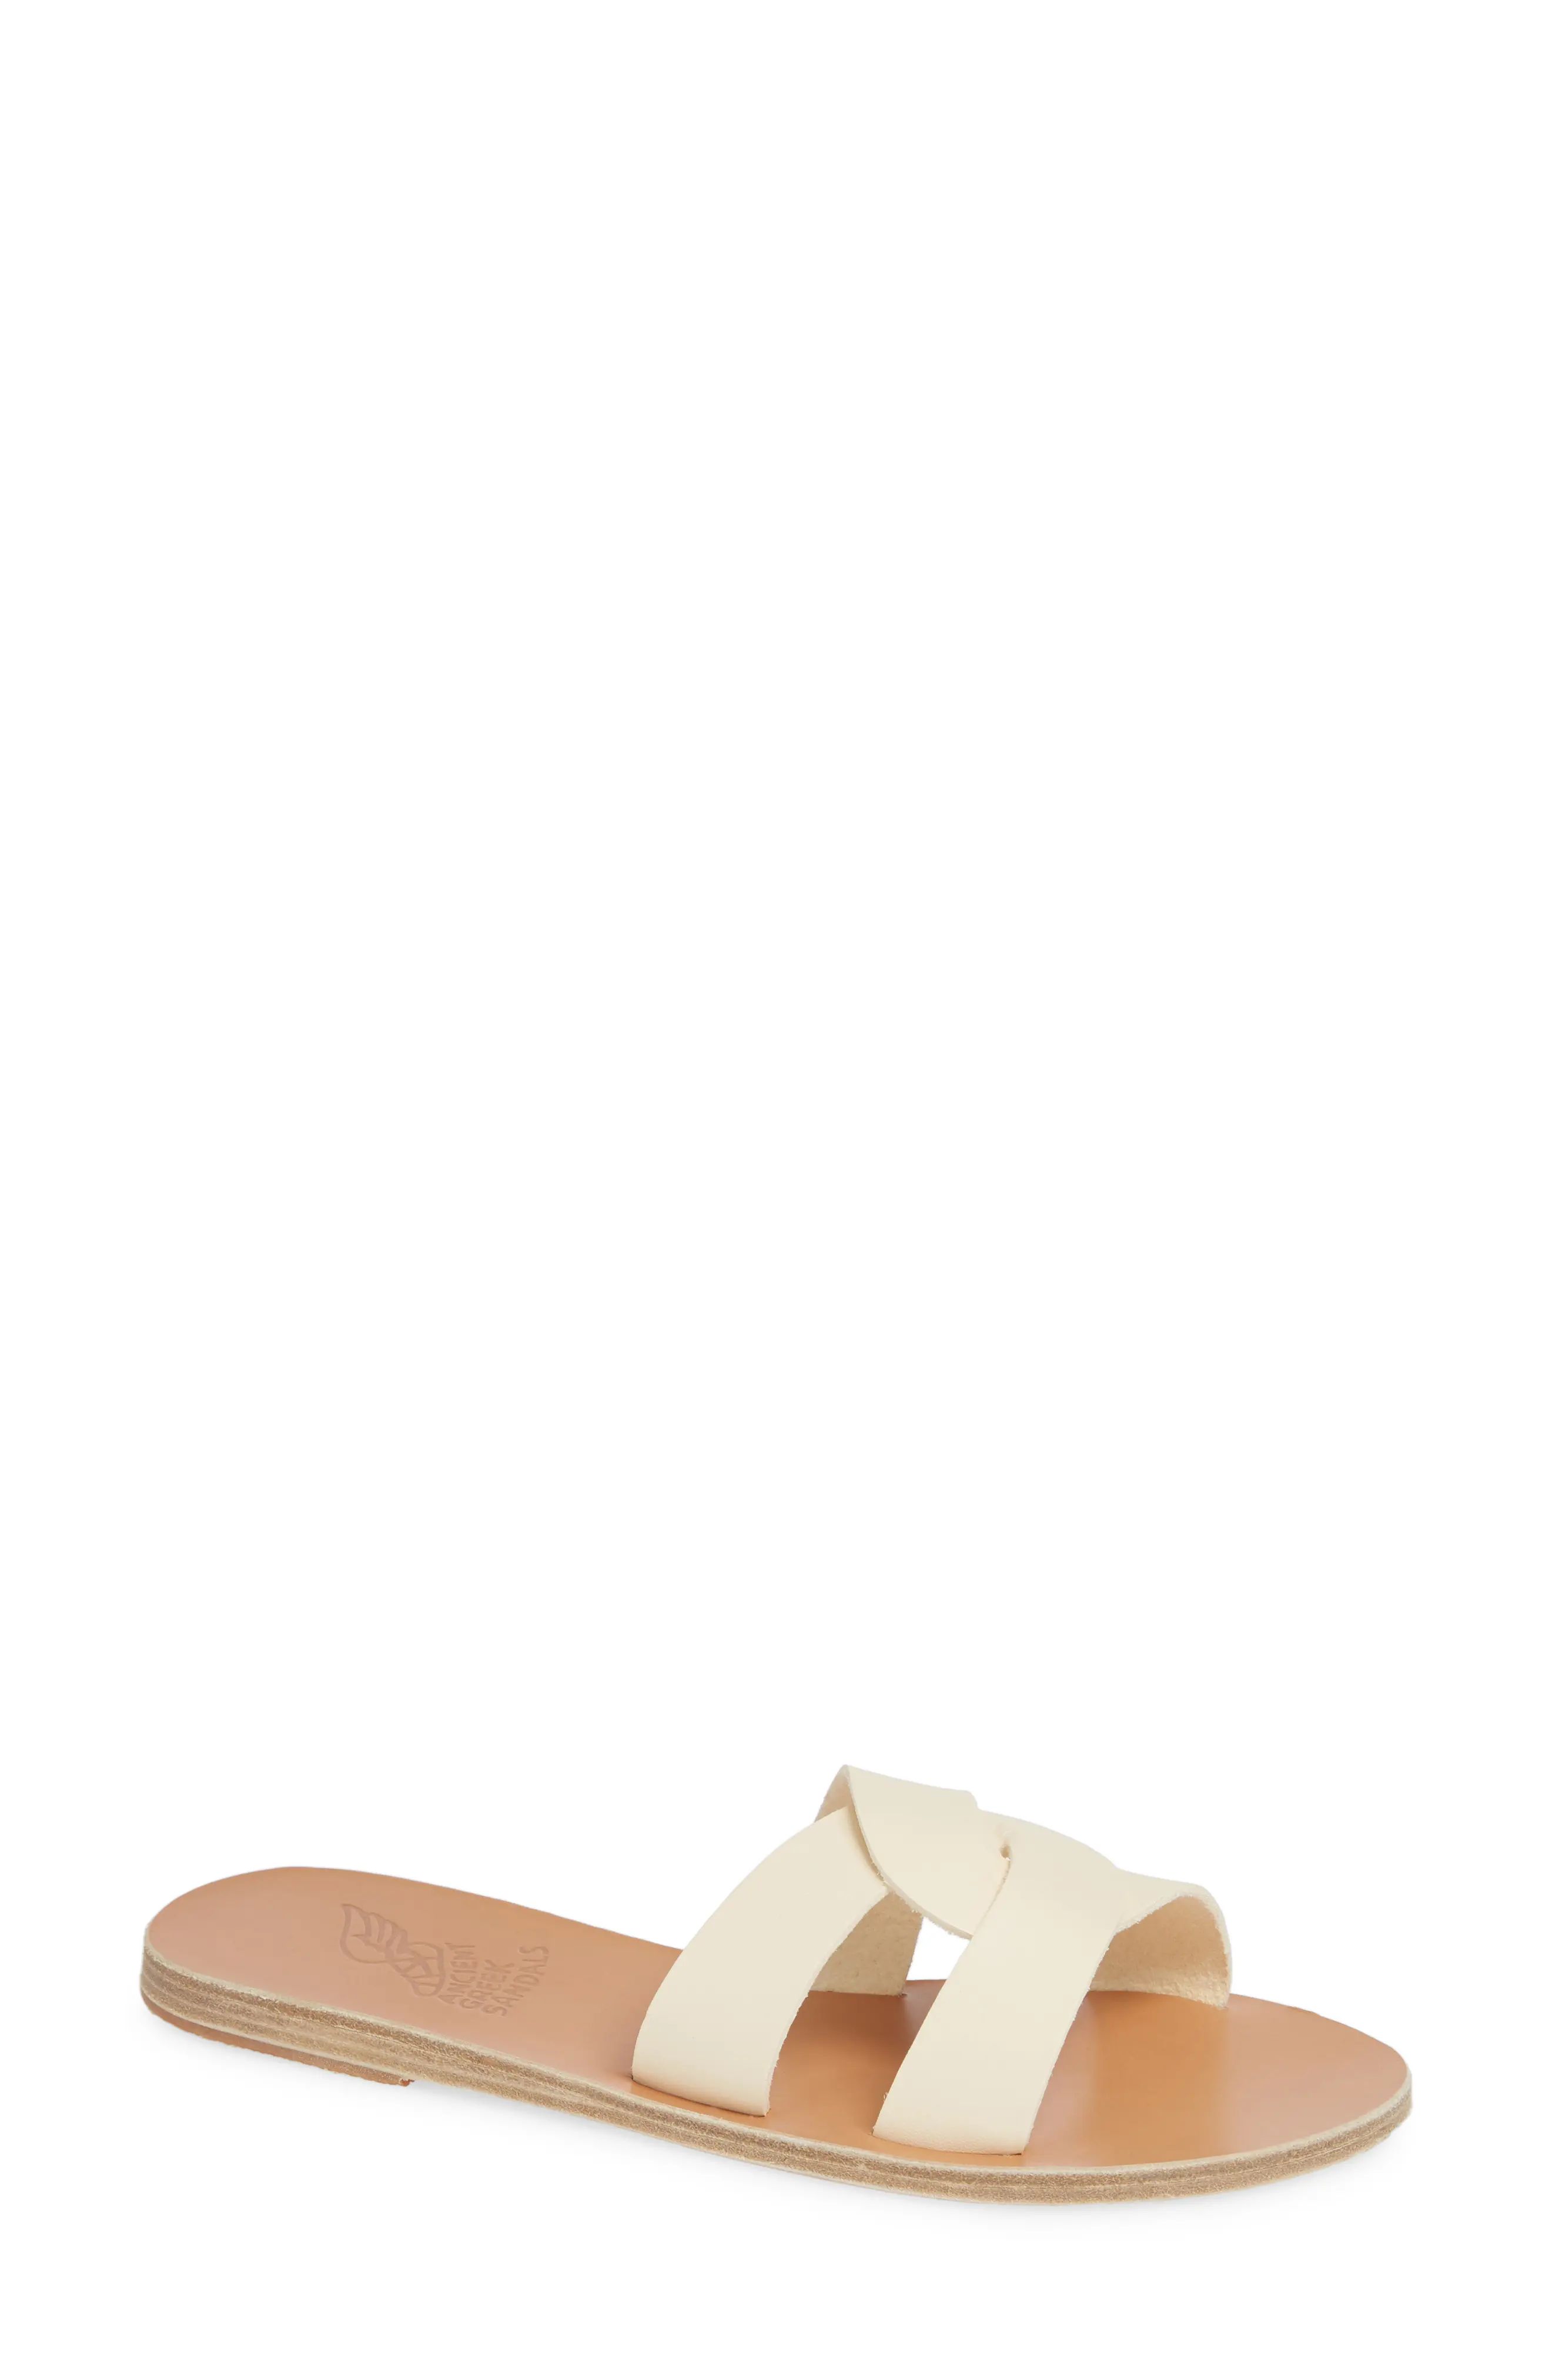 Women's Ancient Greek Sandals Desmos Slide Sandal, Size 5US / 35EU - White | Nordstrom